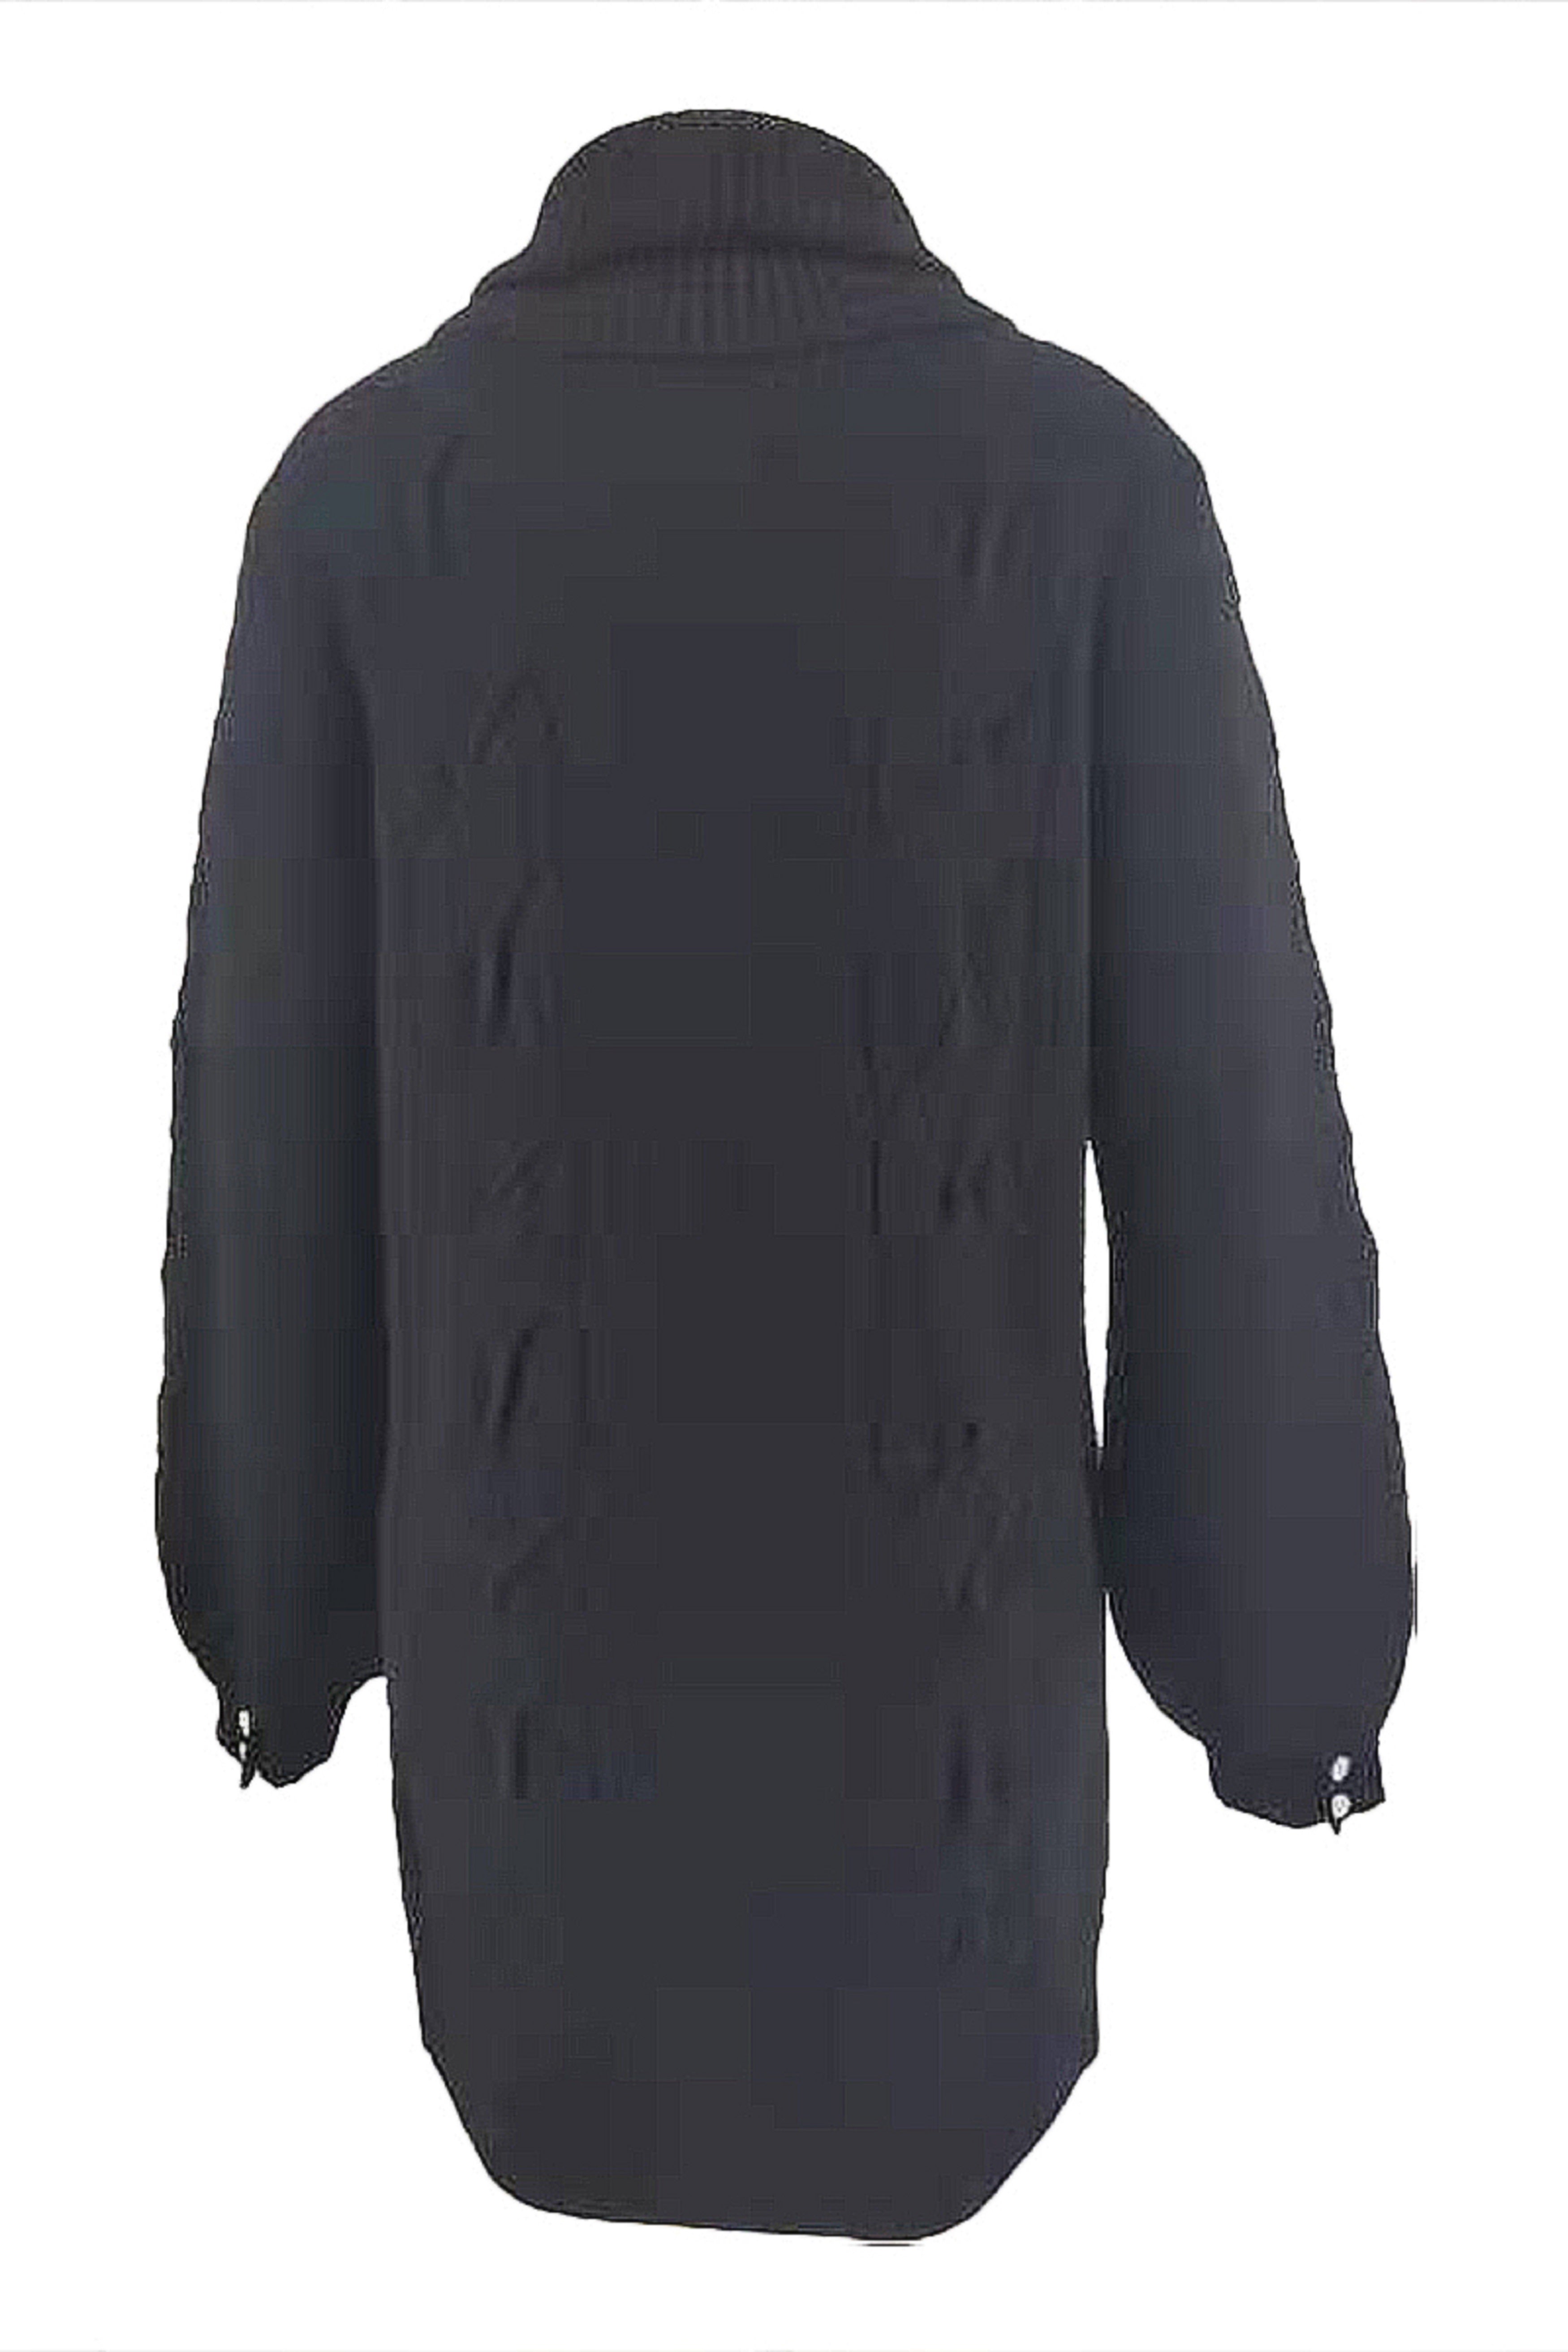 Merino Wool Cashmere | Turtle Neck Sweater | Women Turtle Neck Long Sleeve Sweater | Bellemere New York